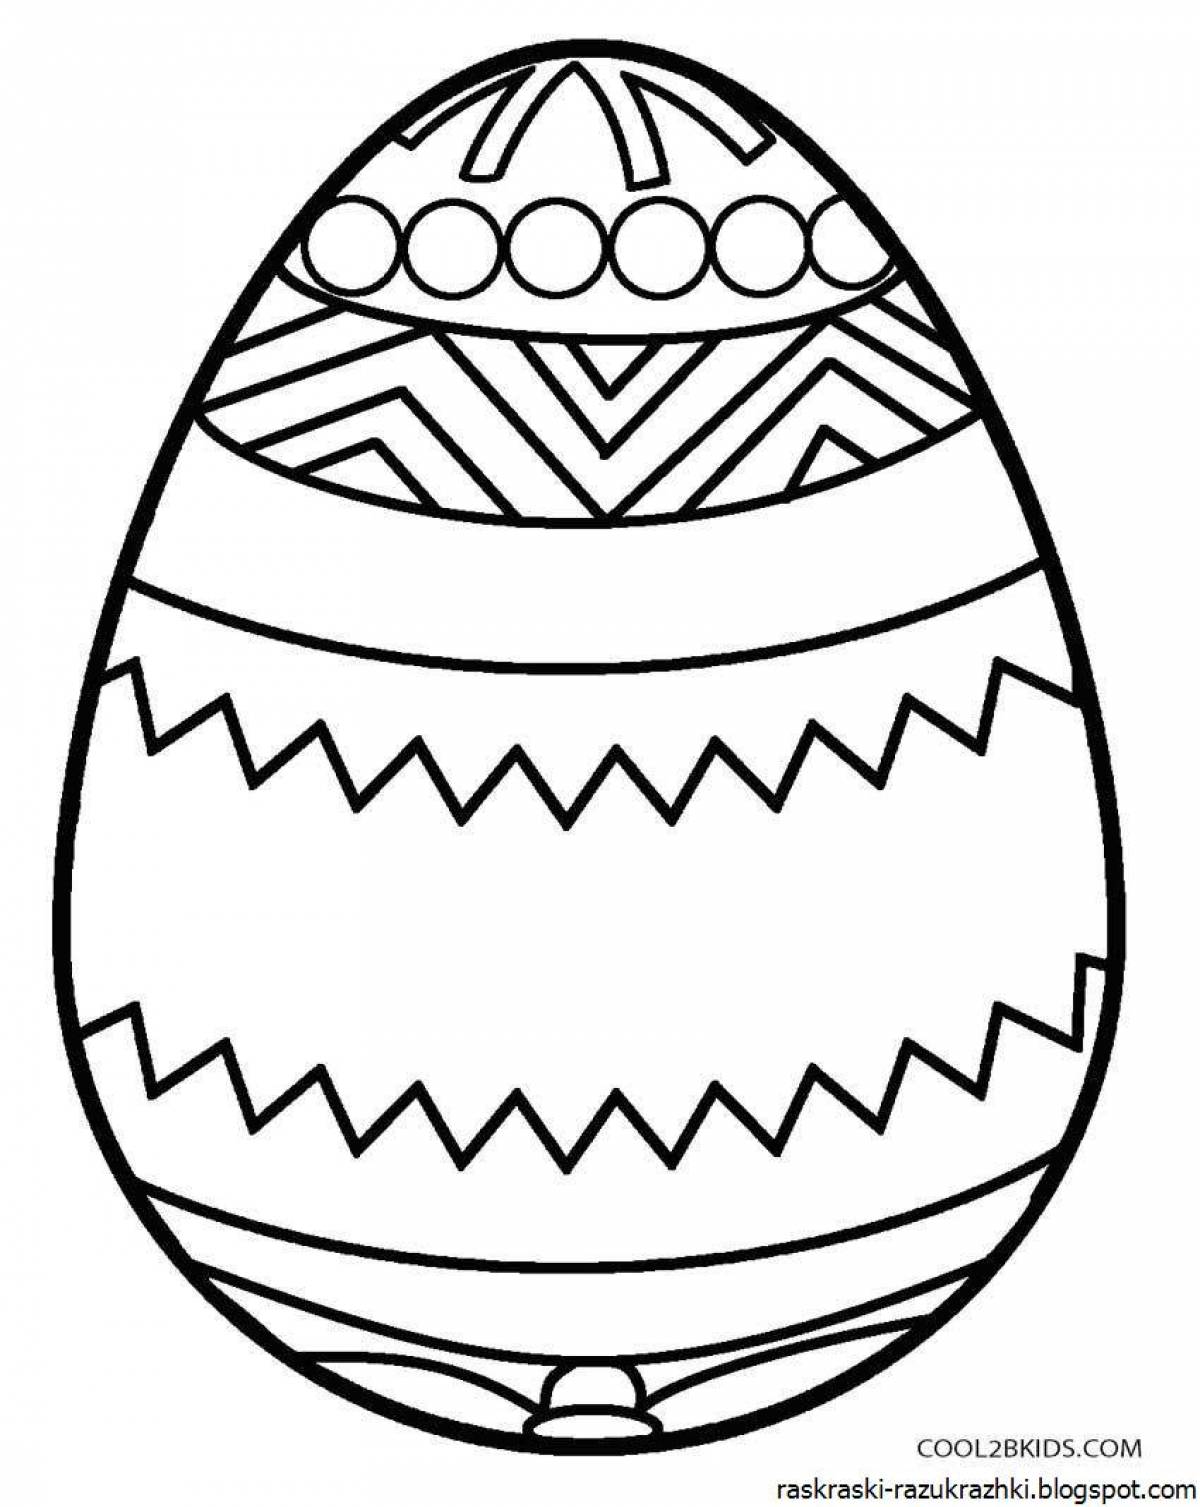 Fun Easter egg coloring